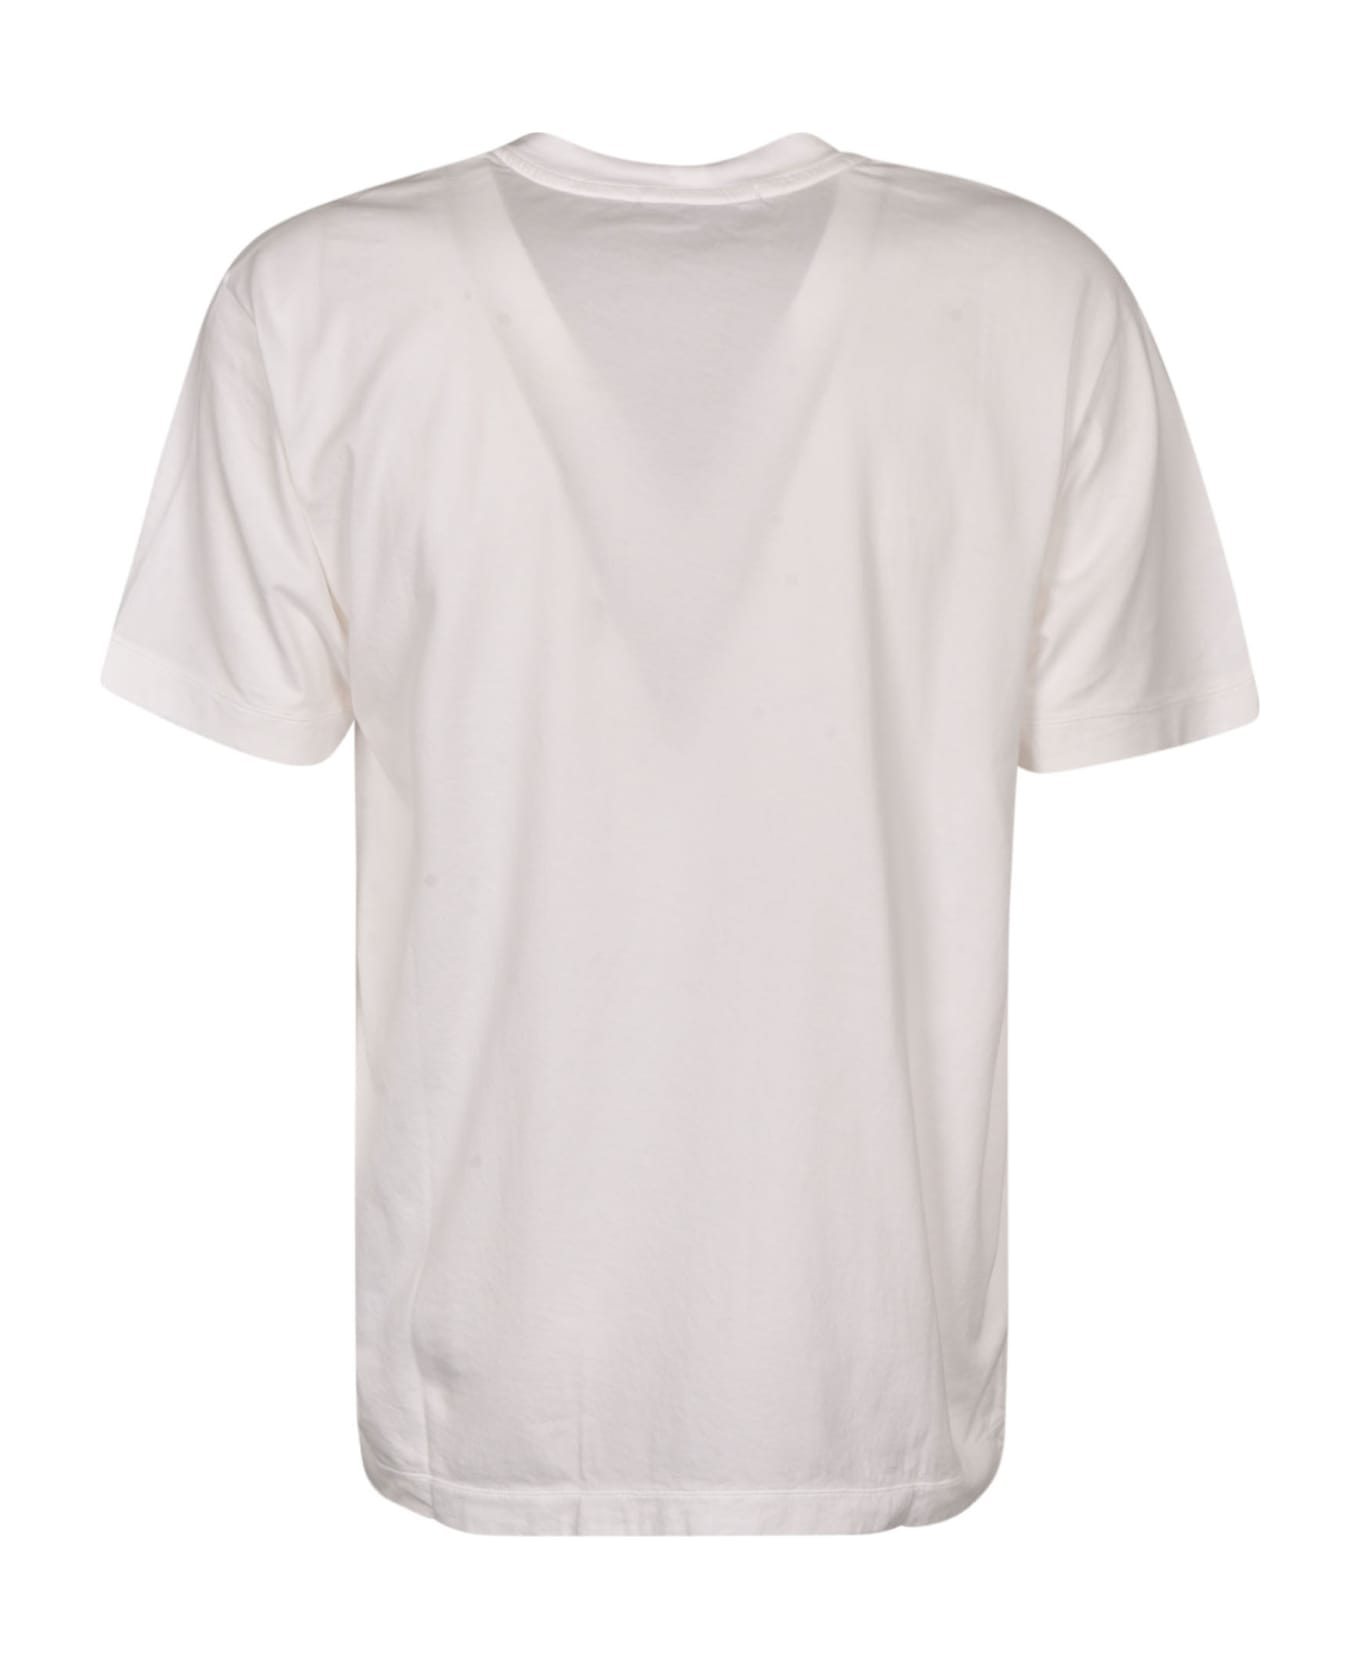 Stone Island Logo Patch T-shirt - White